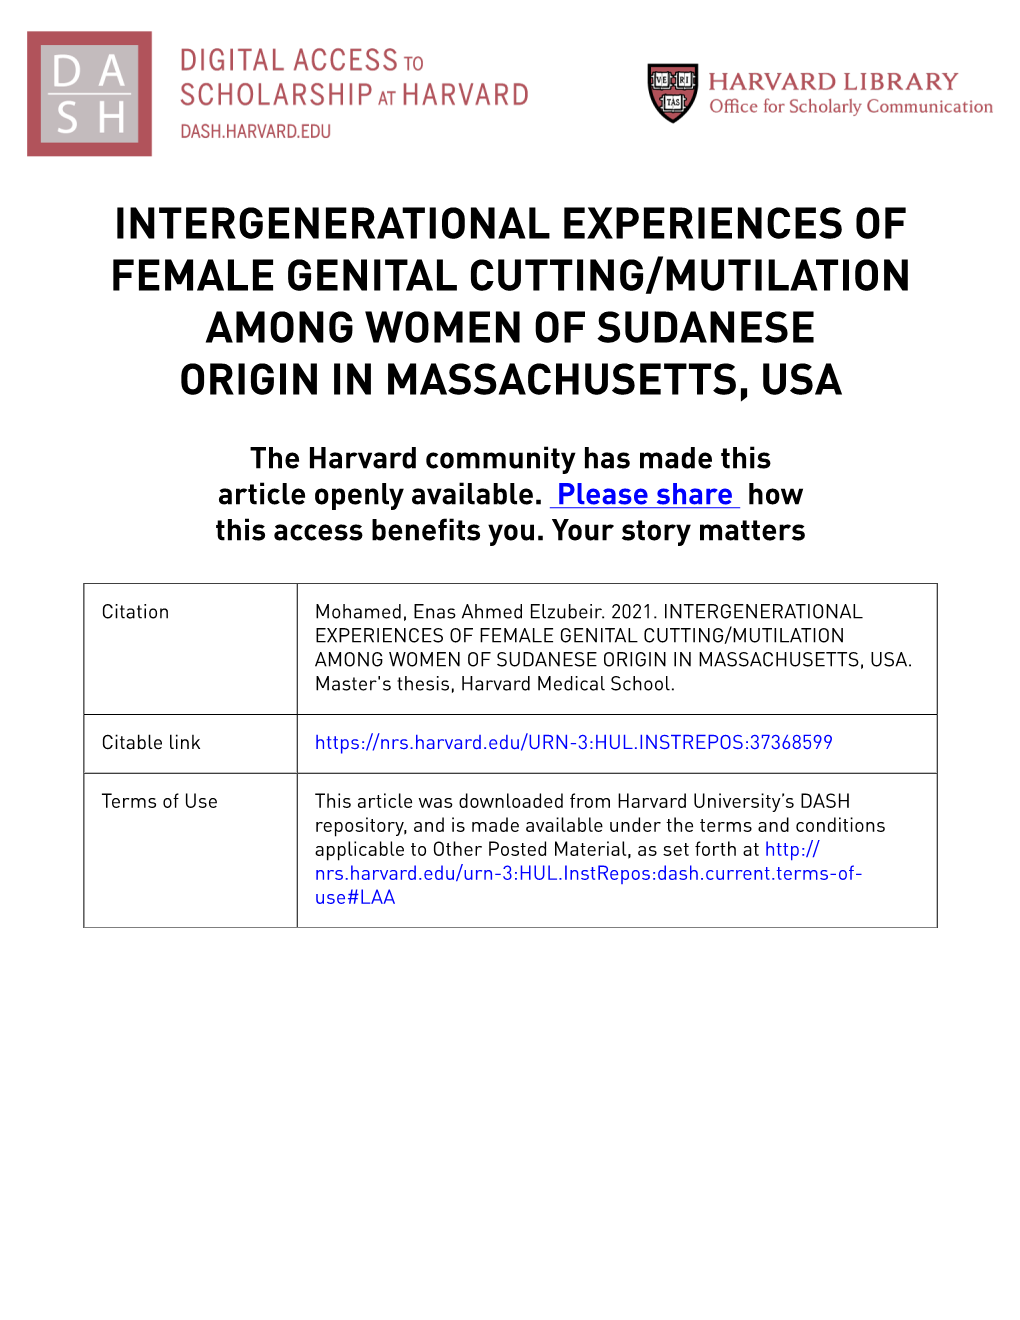 Intergenerational Experiences of Female Genital Cutting/Mutilation Among Women of Sudanese Origin in Massachusetts, Usa